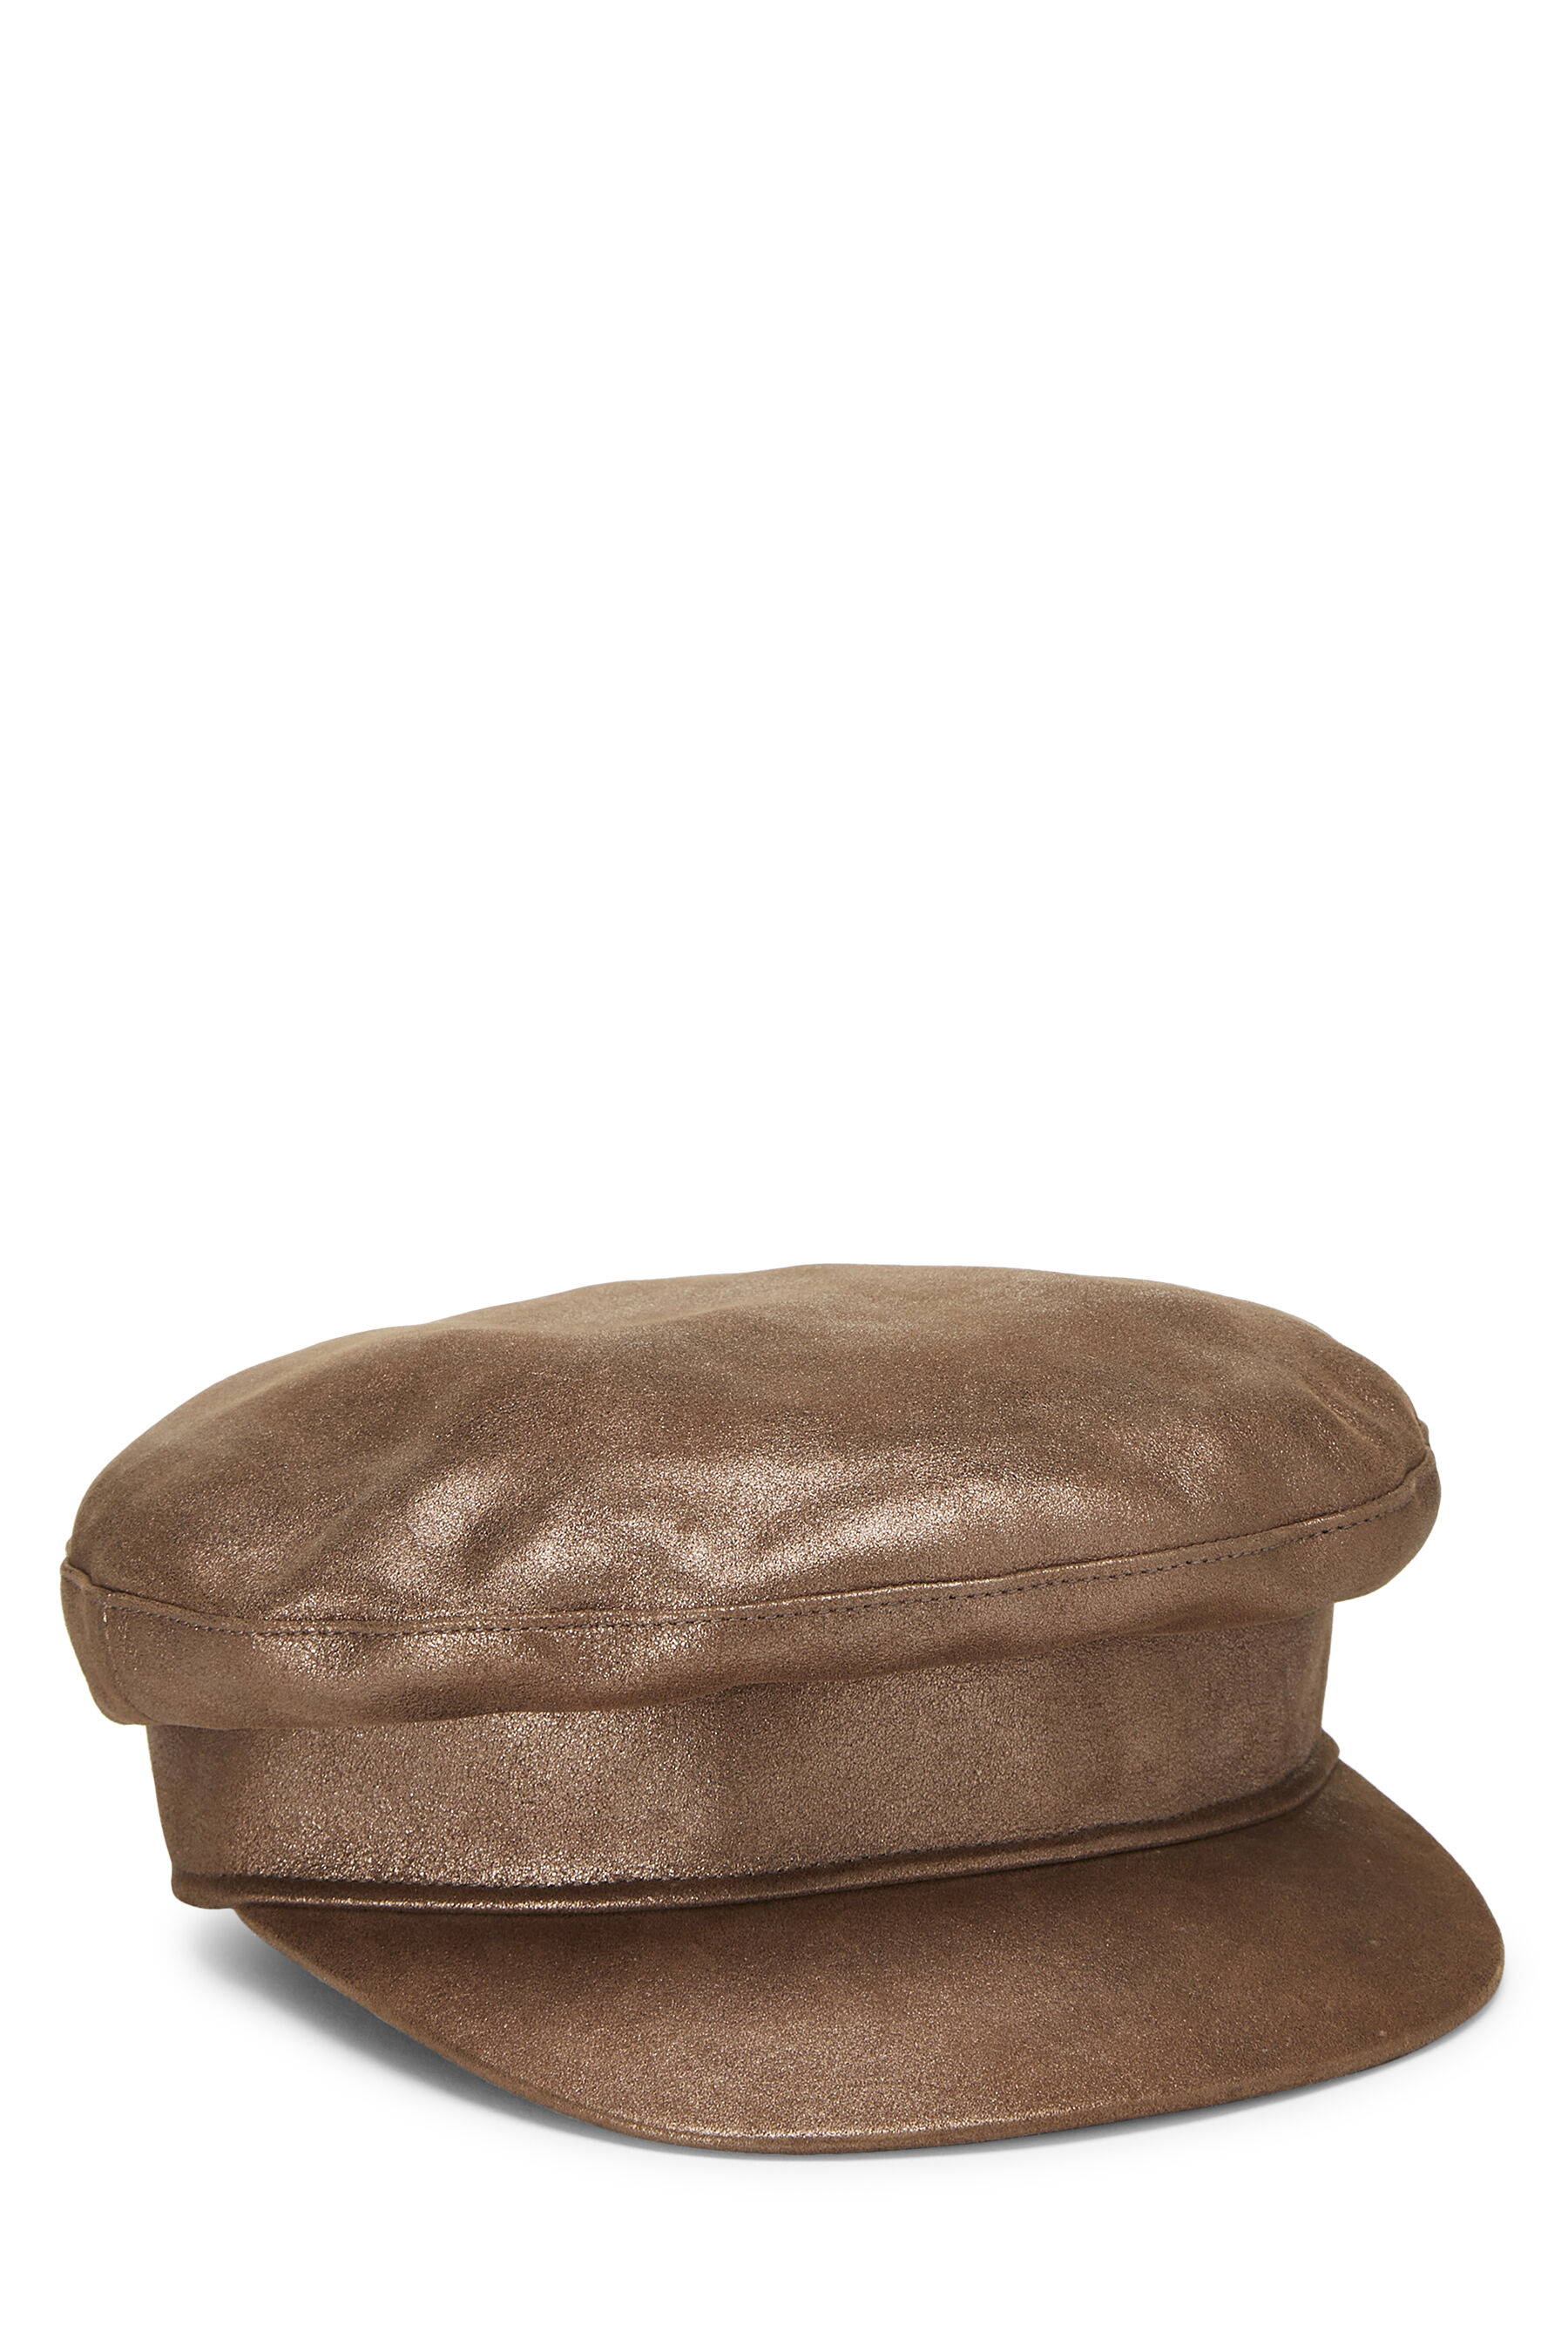 Metallic Brown Leather Baker Hat